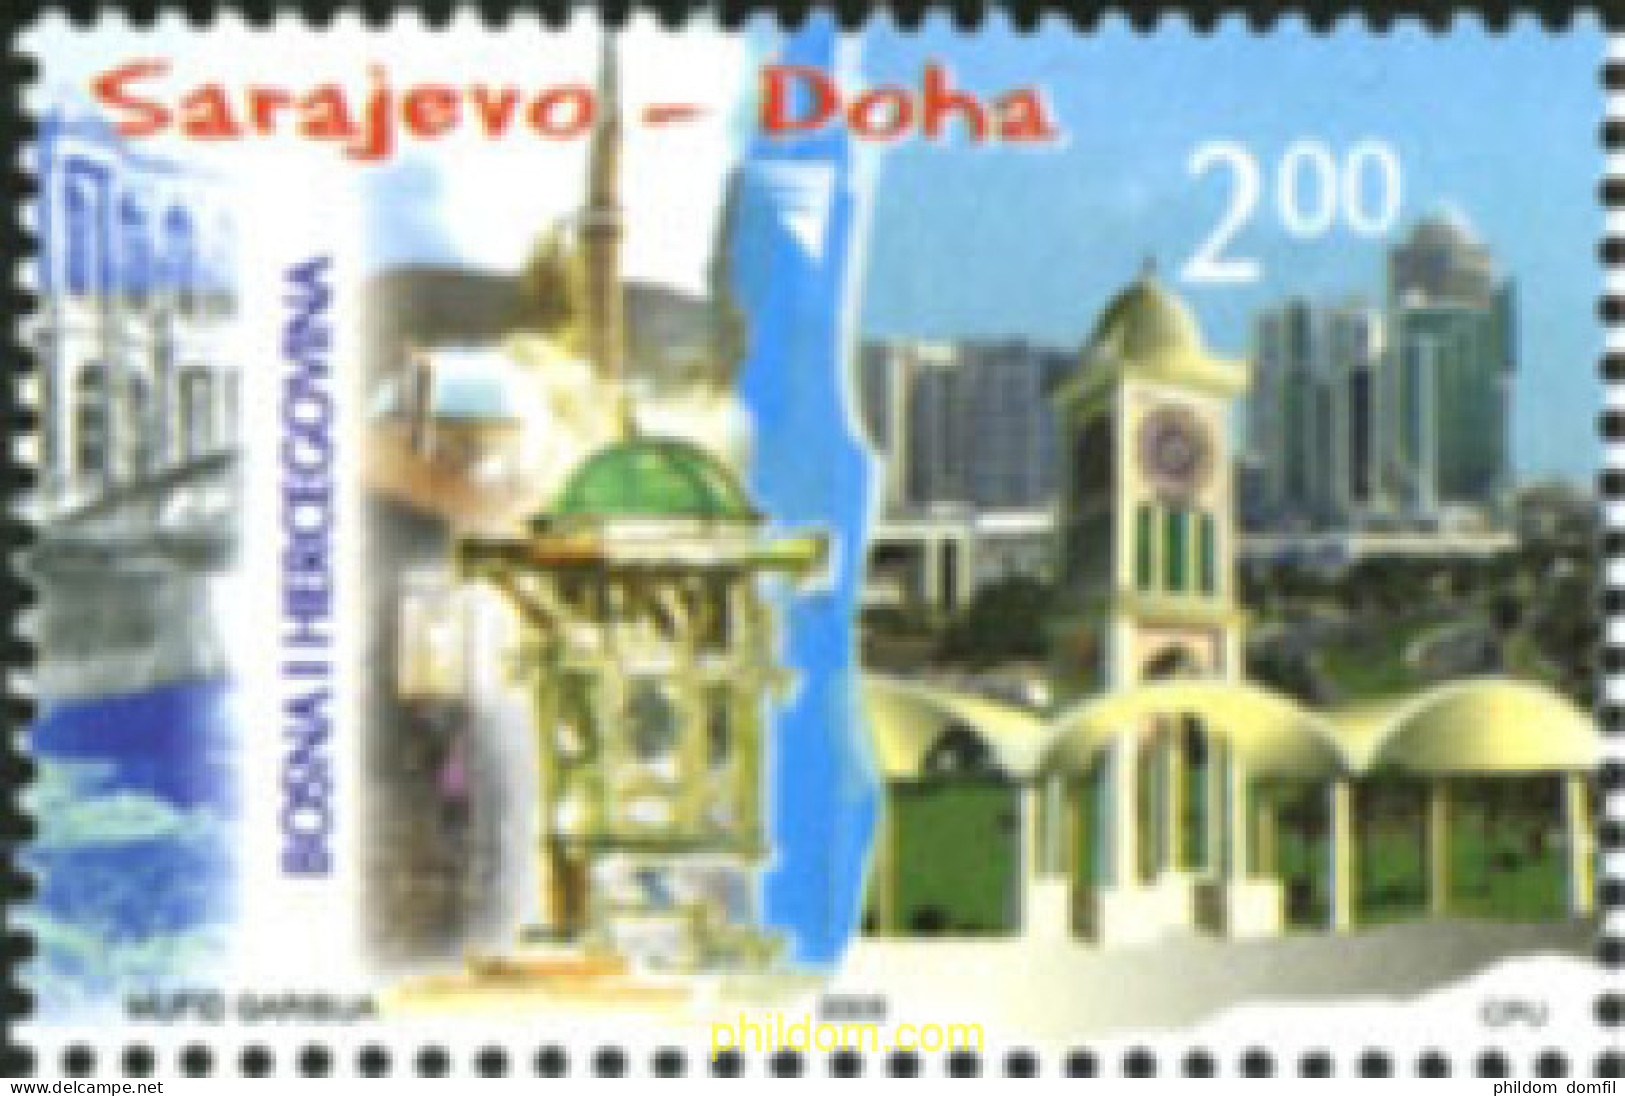 183750 MNH BOSNIA-HERZEGOVINA 2005 VILLAS DE SARAJEVO - Bosnia Herzegovina